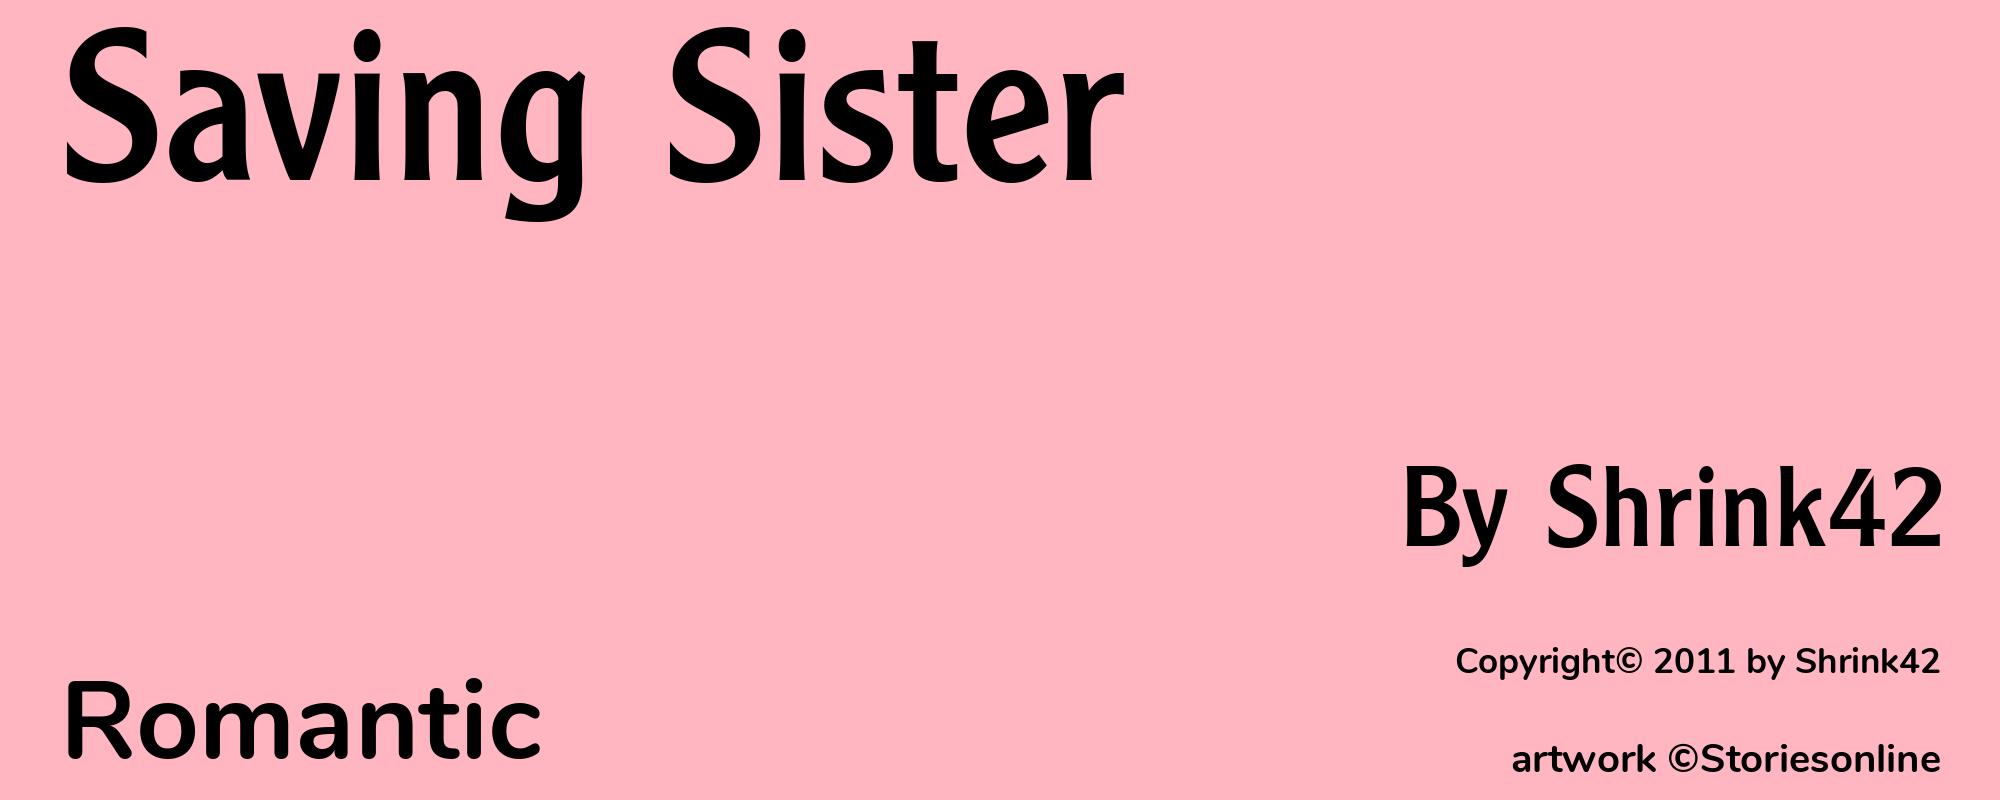 Saving Sister - Cover